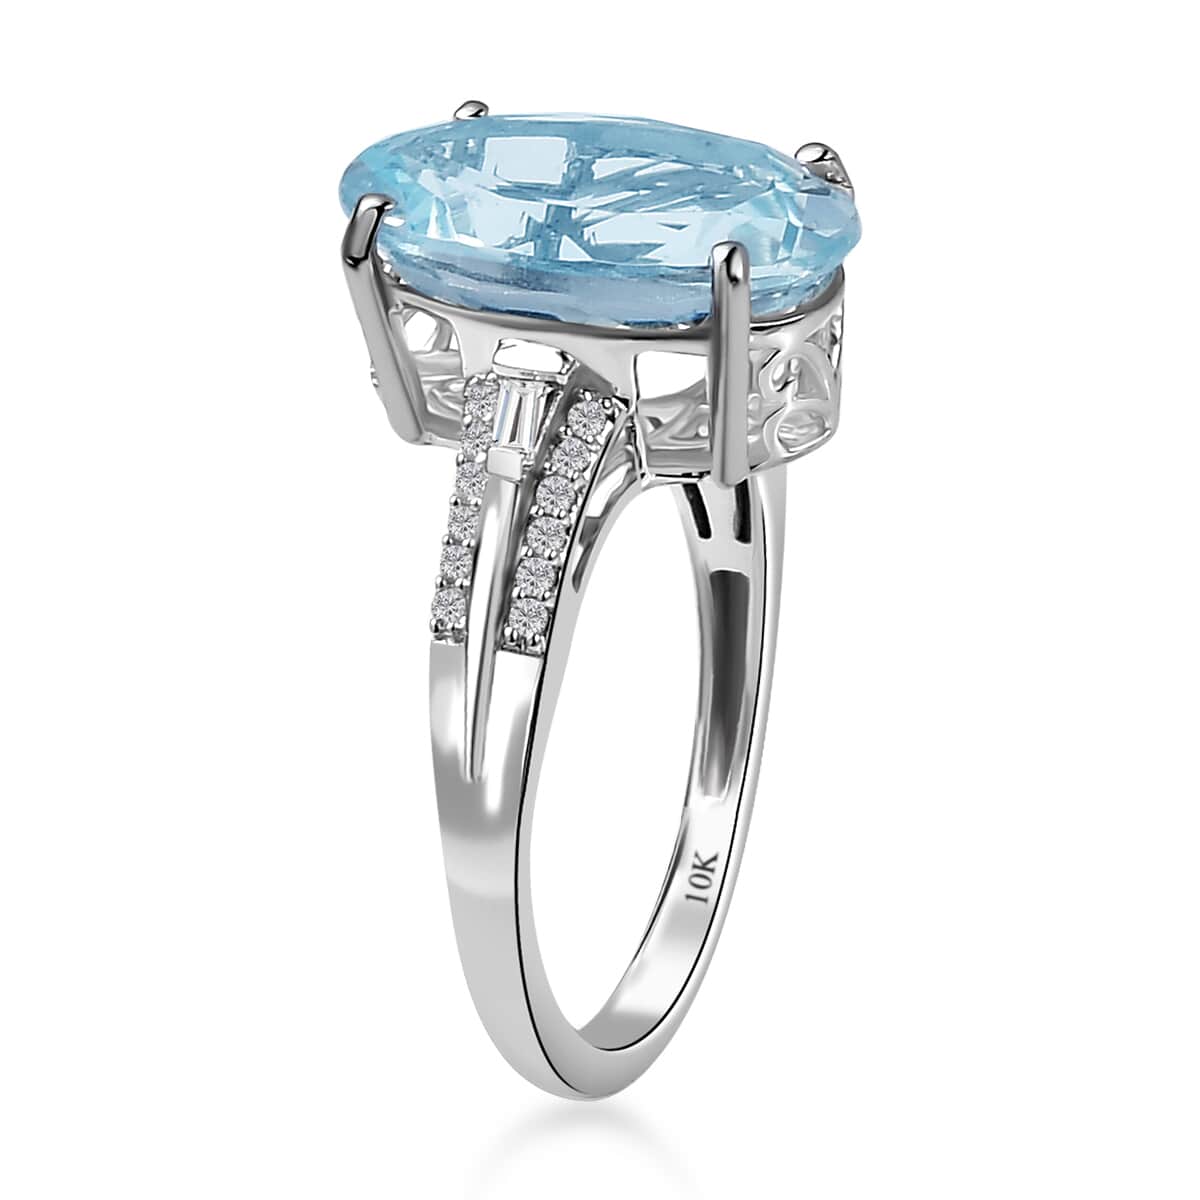 Luxoro 10K White Gold Premium Mangoro Aquamarine, Diamond (G-H, I3) Ring (Size 10.0) 5.15 ctw image number 3